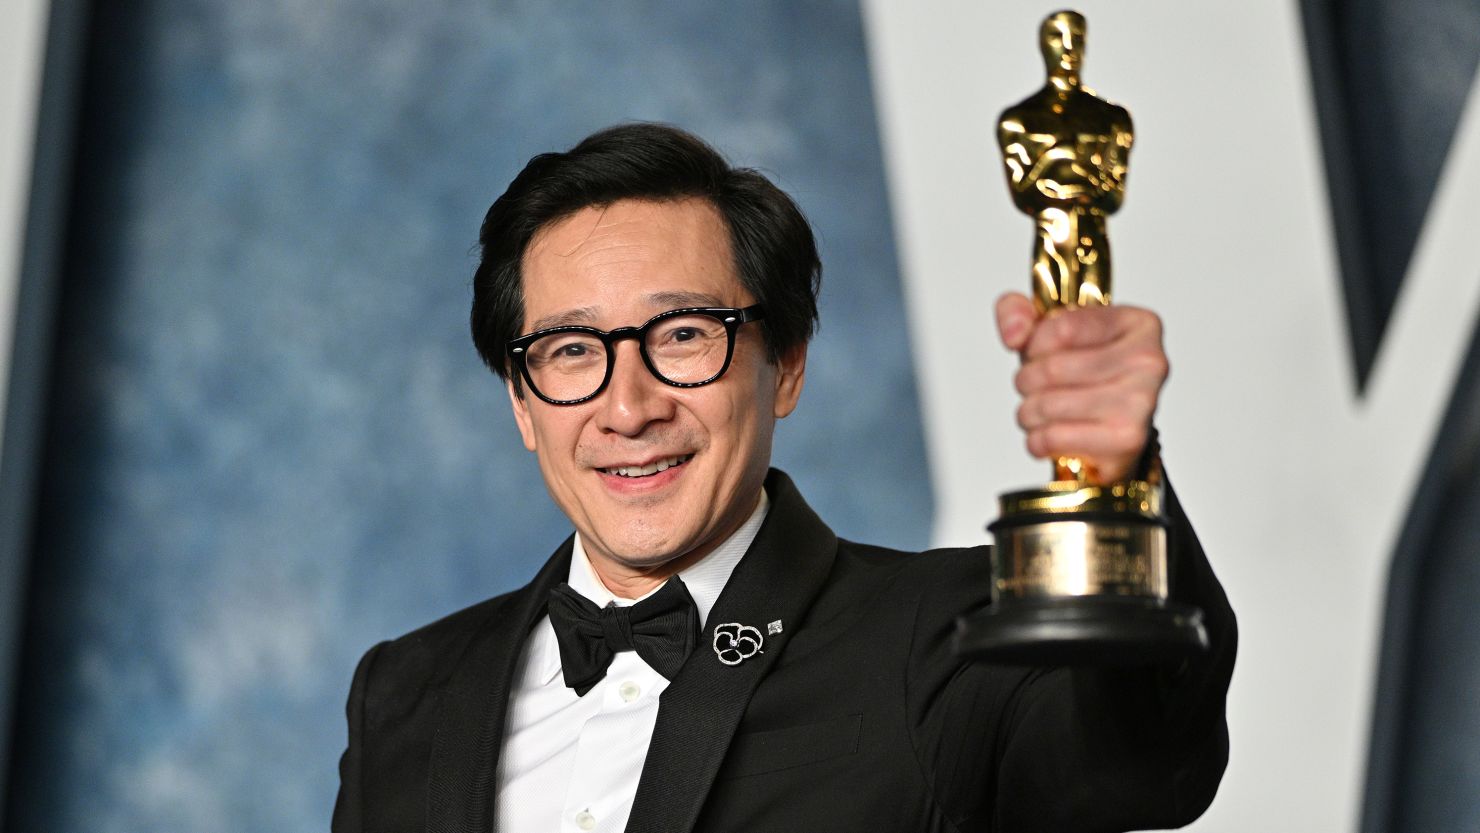 Ke Huy Quan Oscar Win and Cate Blanchett's Epic Advice